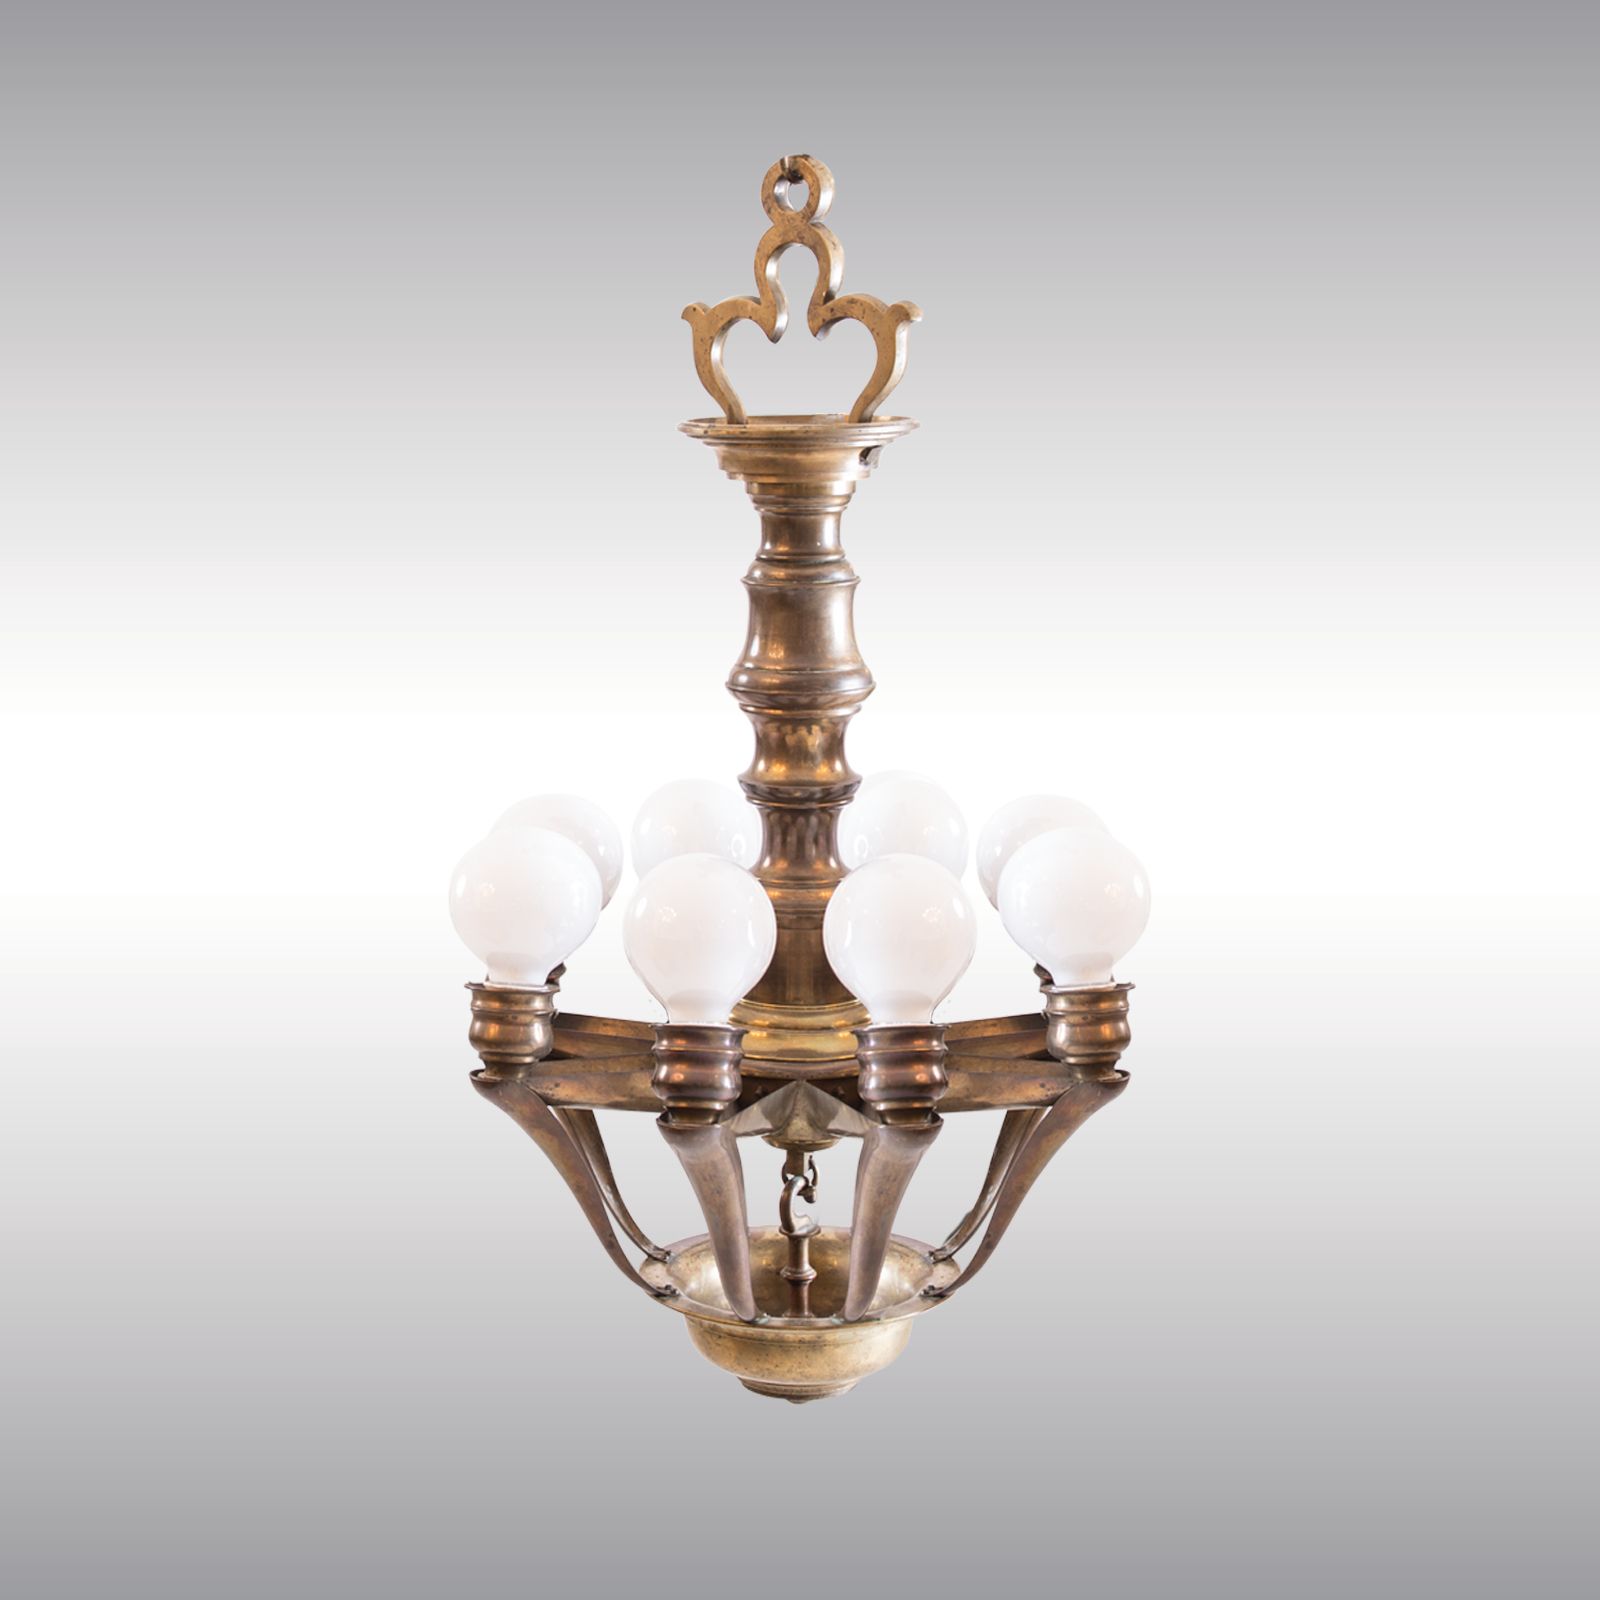 WOKA LAMPS VIENNA - OrderNr.: 50105|Adolf Loos Chandelier Villa Kapsa - Design: Adolf Loos